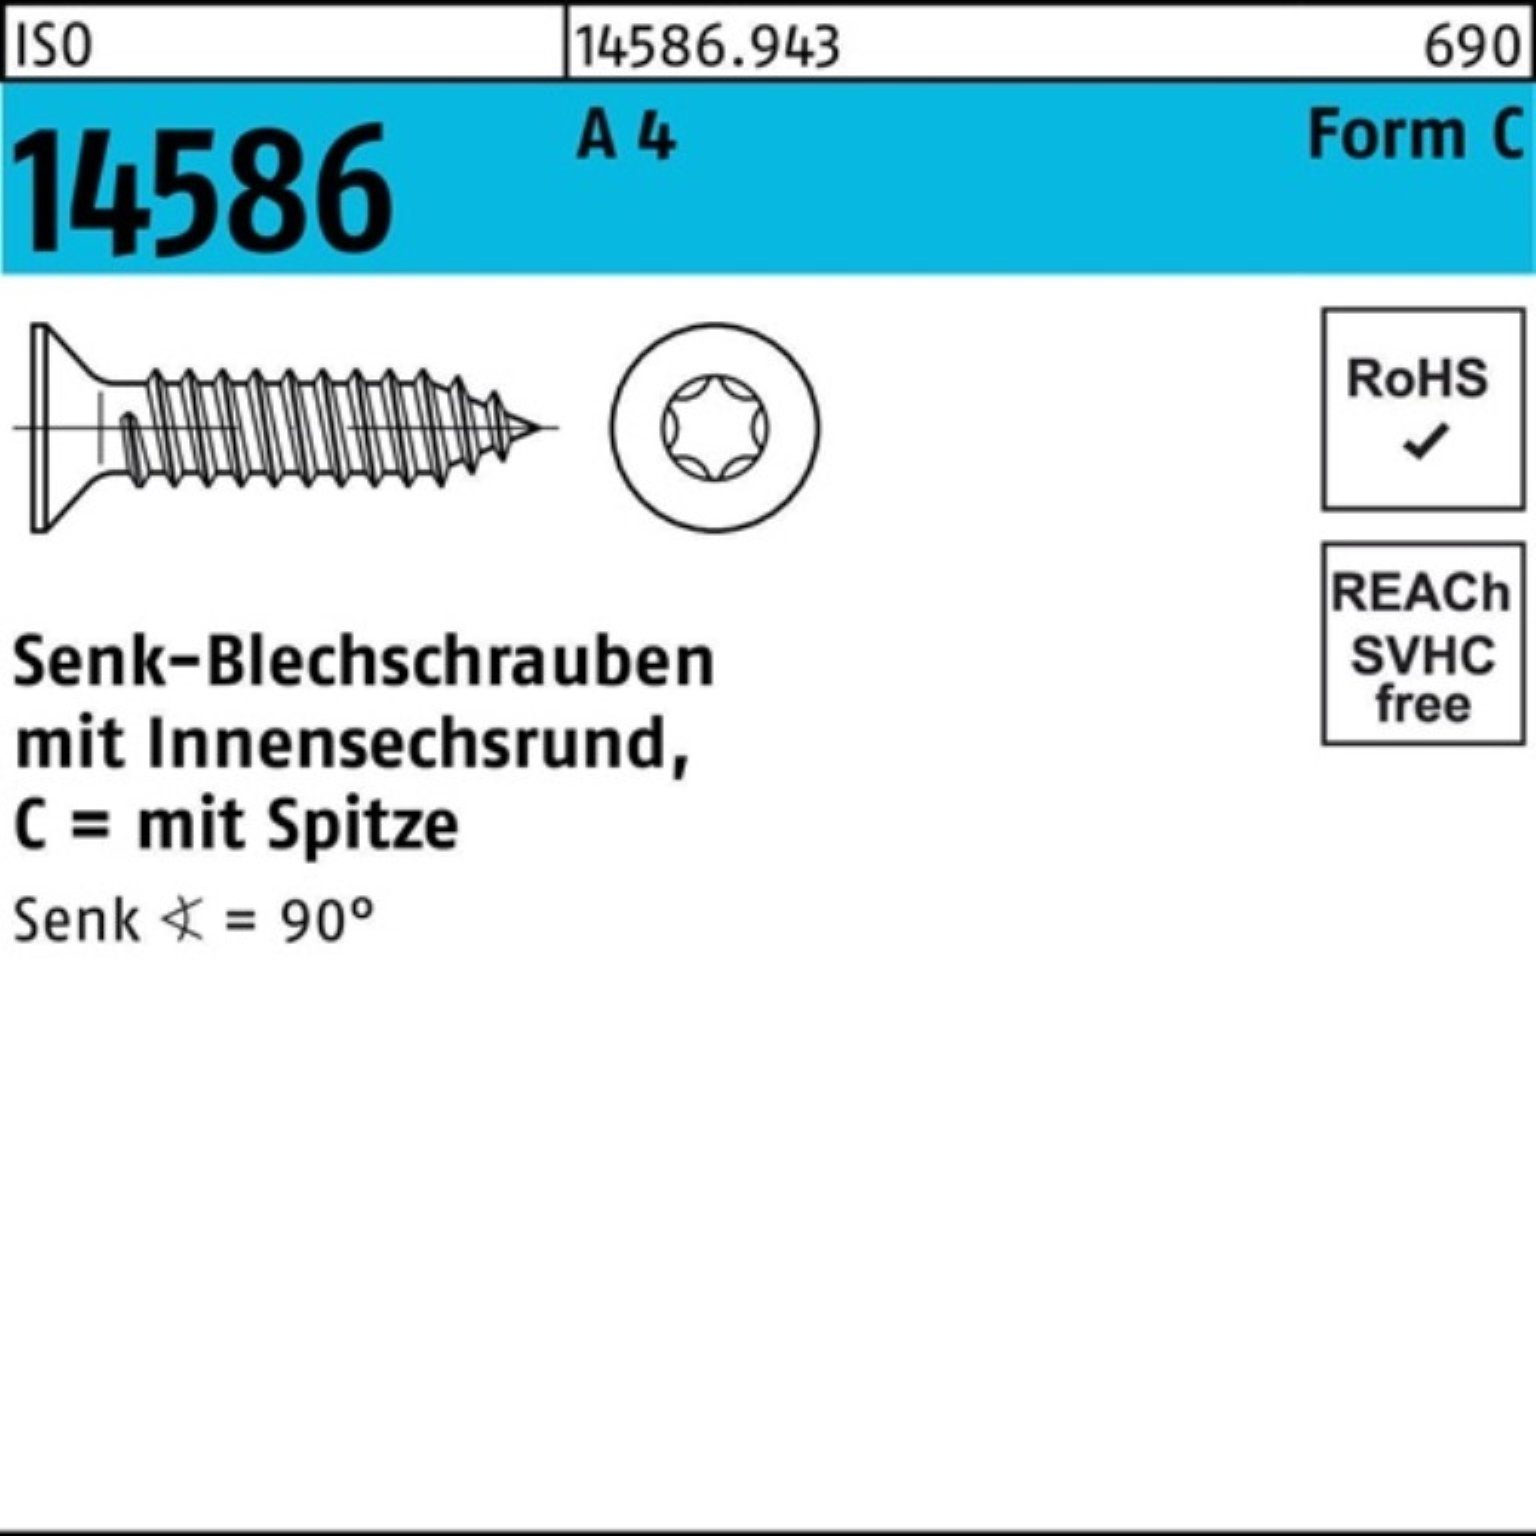 Reyher Schraube 1000er Pack Senkblechschraube ISO 14586 ISR/Spitze 3,9x 19-T15 A 4 100 | Schrauben